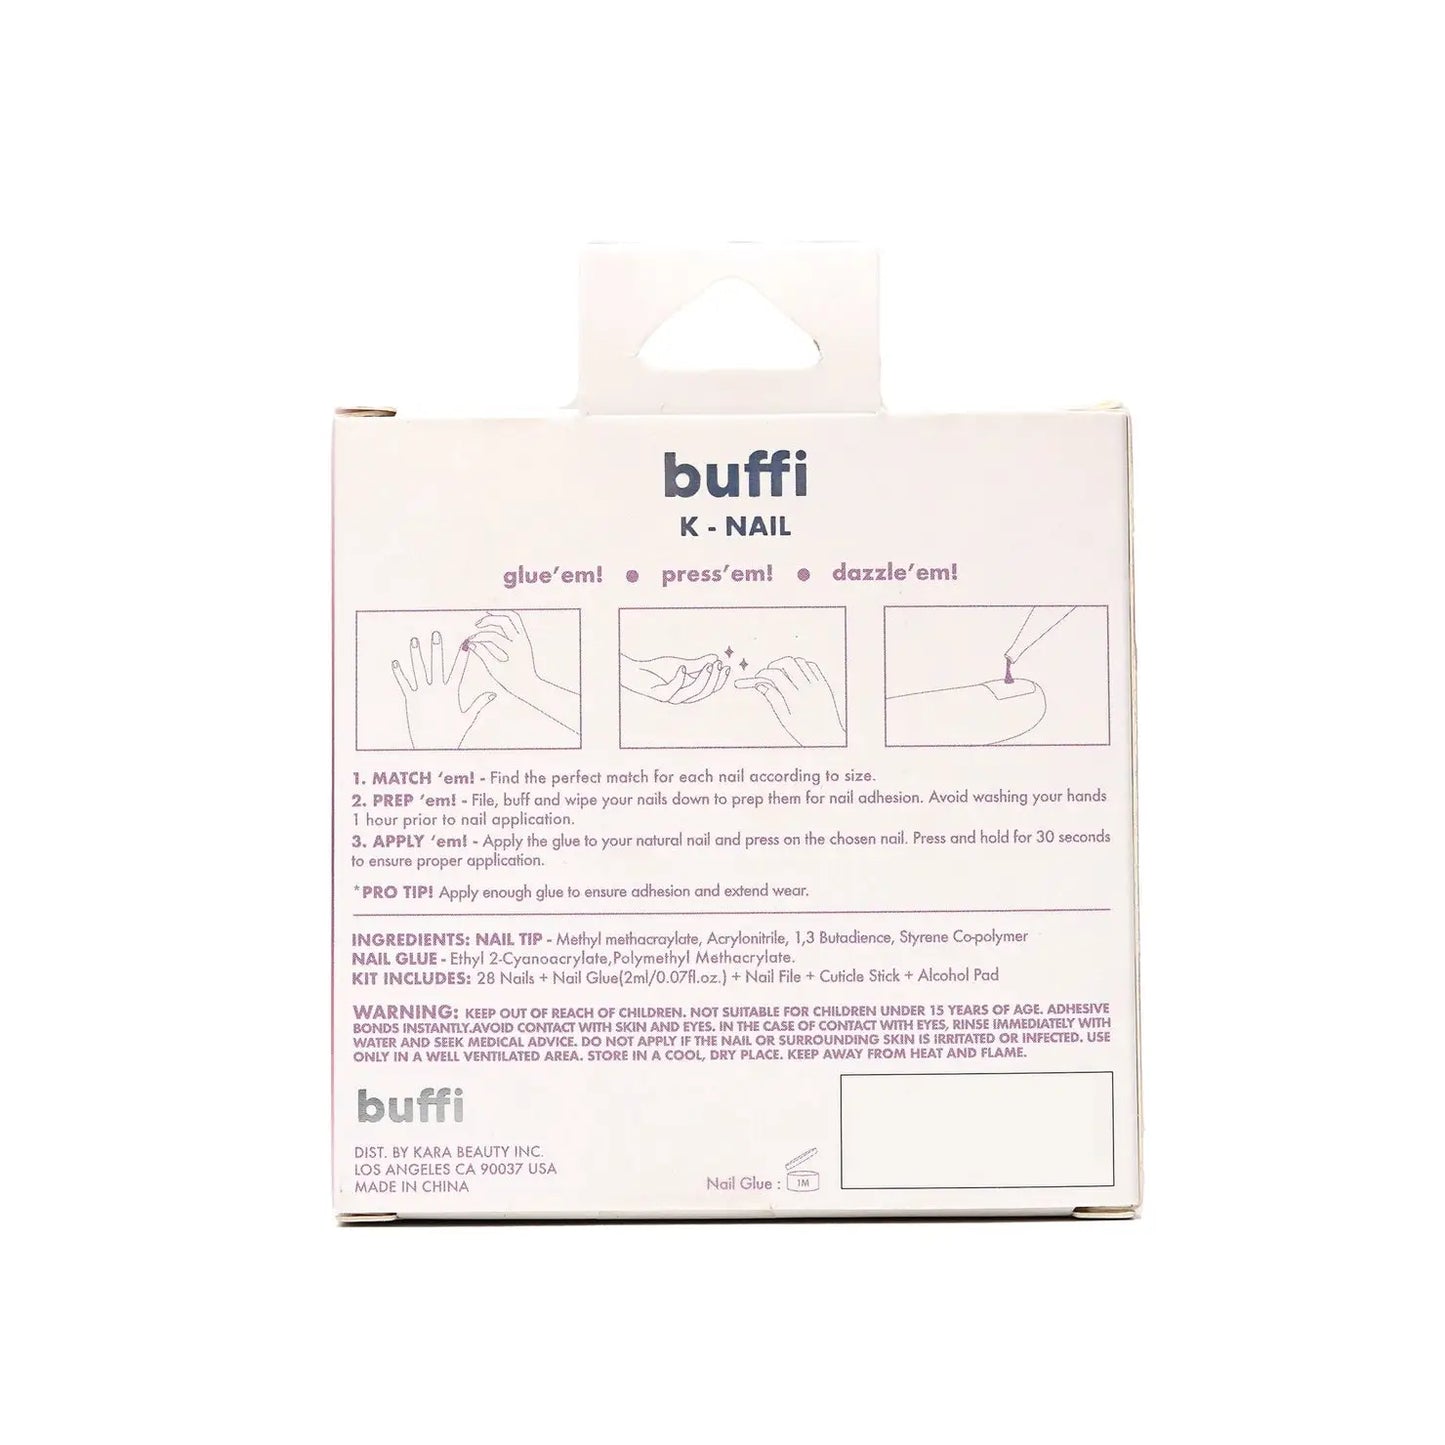 Buffi Press-On Nails - Flower Power